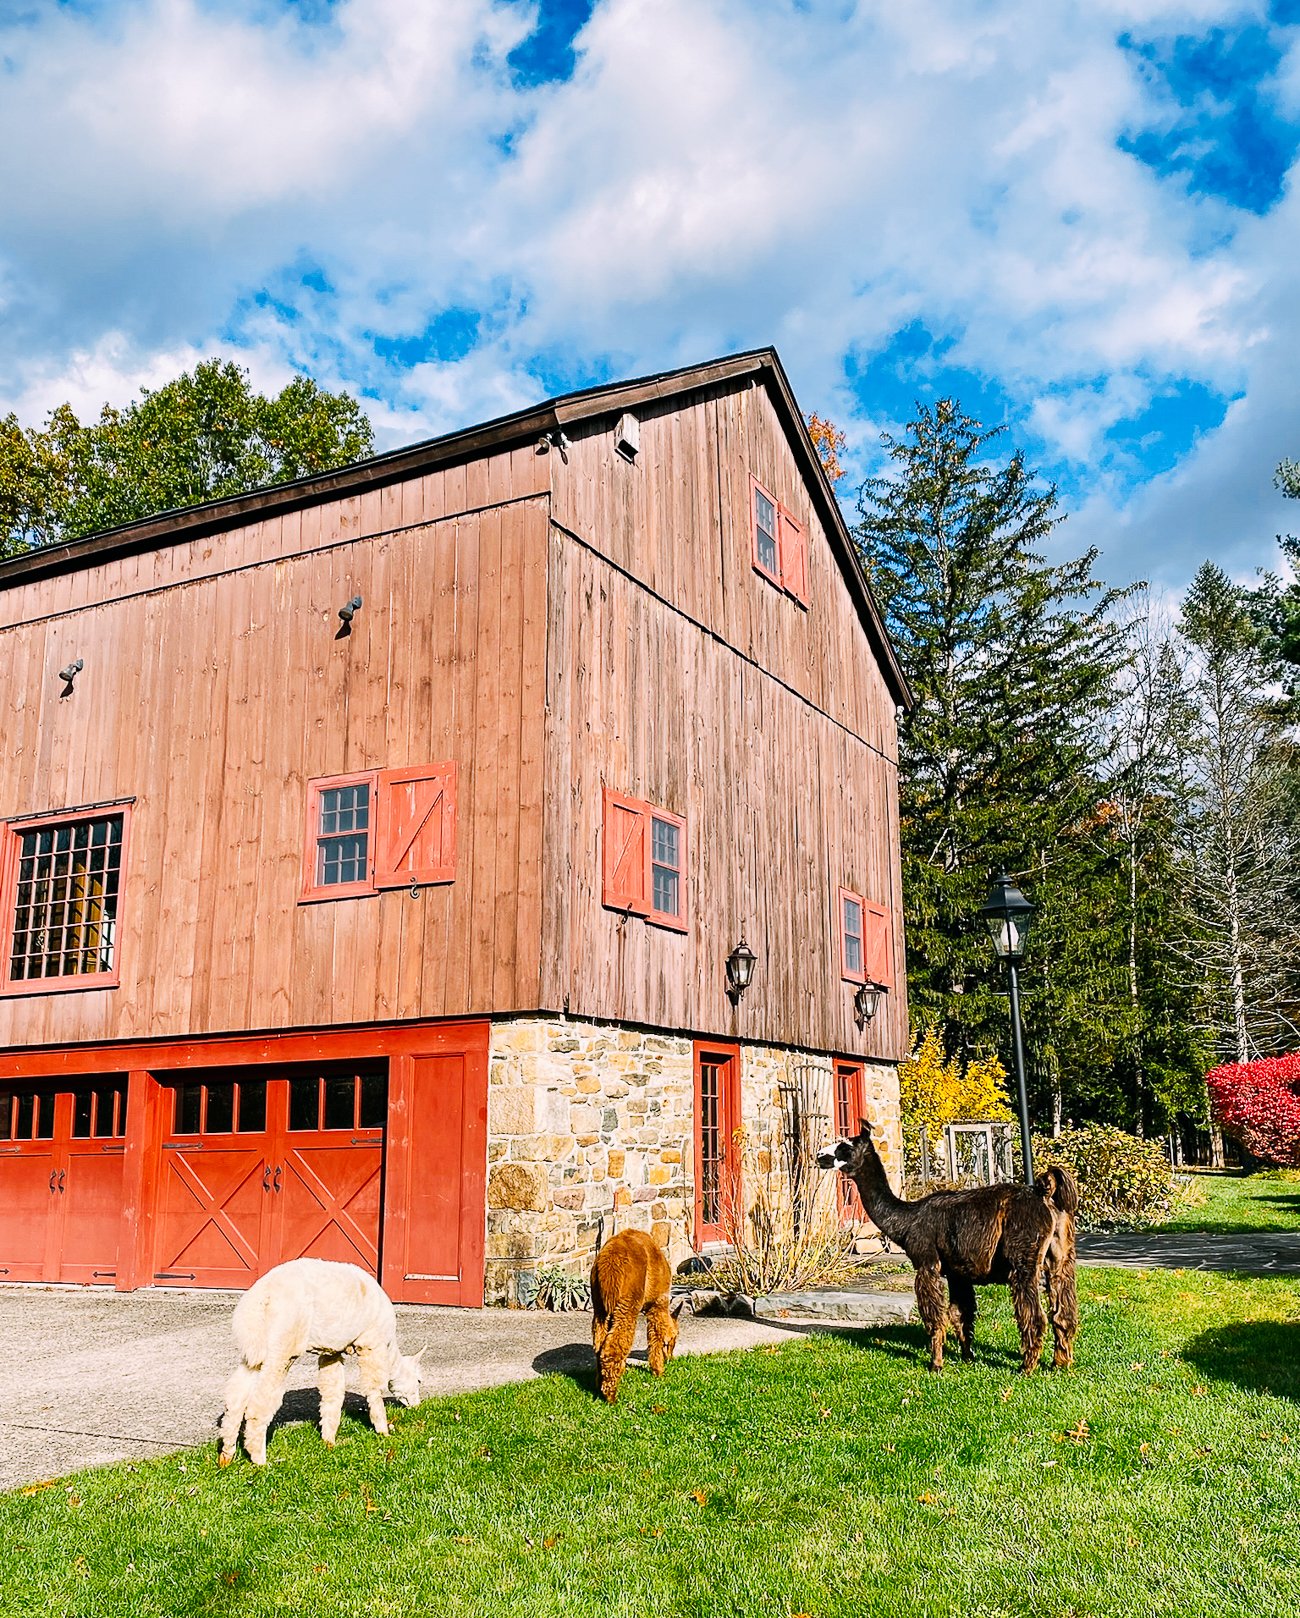 barn and animals